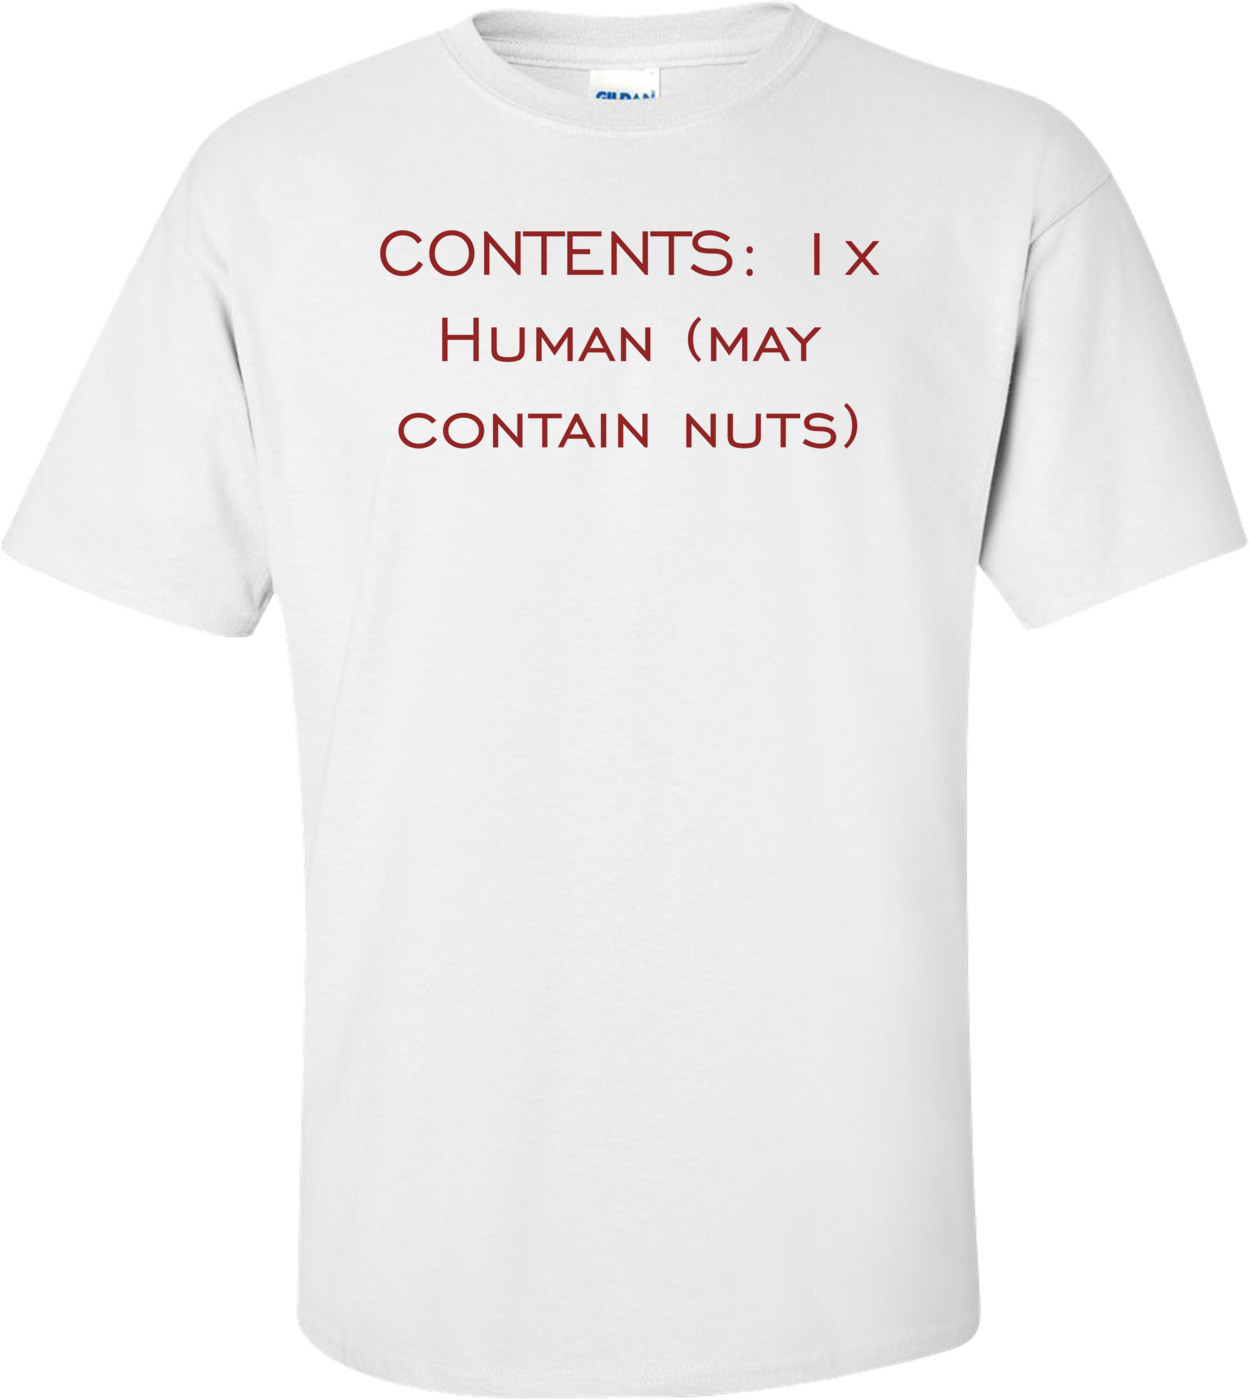 CONTENTS: 1x Human (may contain nuts) Shirt